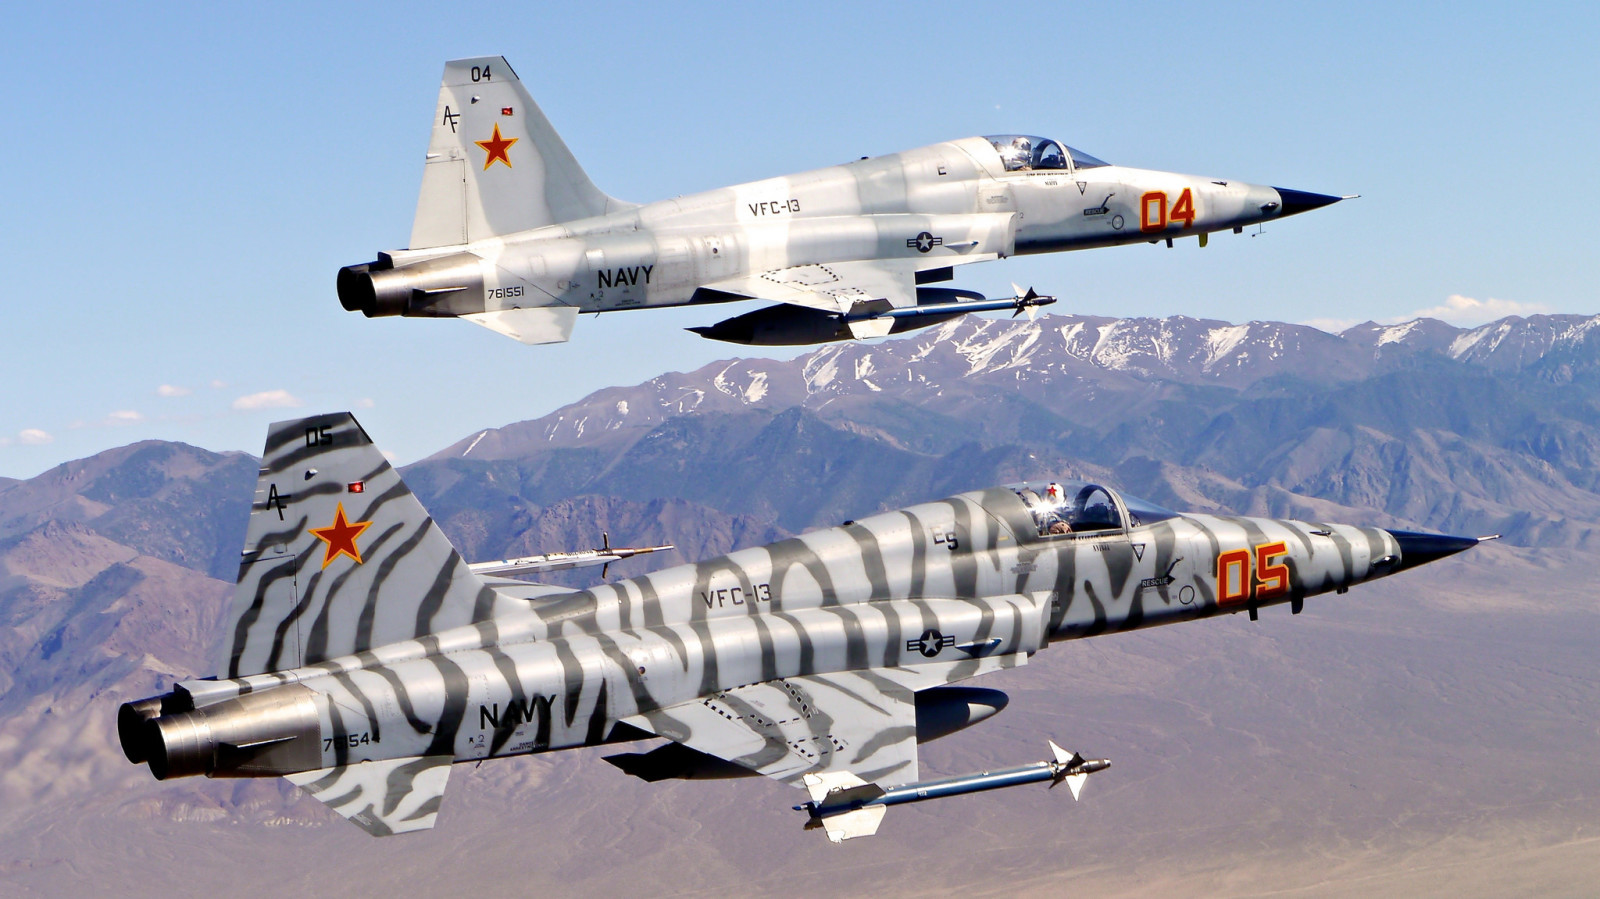 Pejuang, Harimau II, Serba guna, "Pejuang kebebasan", Northrop F-5